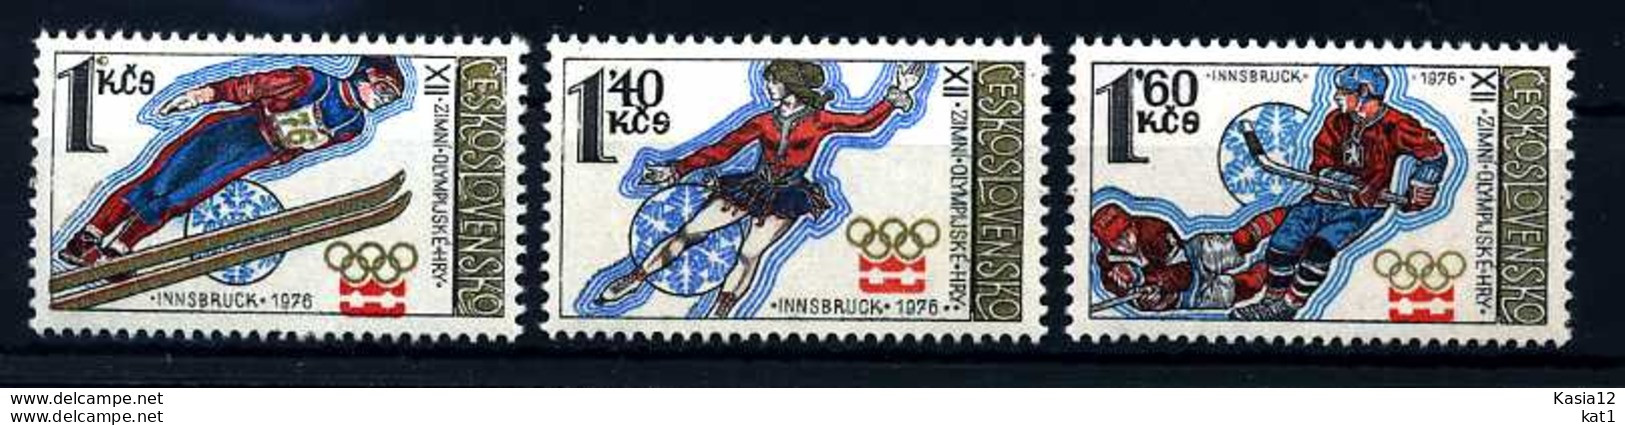 E08601)Olympia 76 CSSR 2305/7** - Hiver 1976: Innsbruck